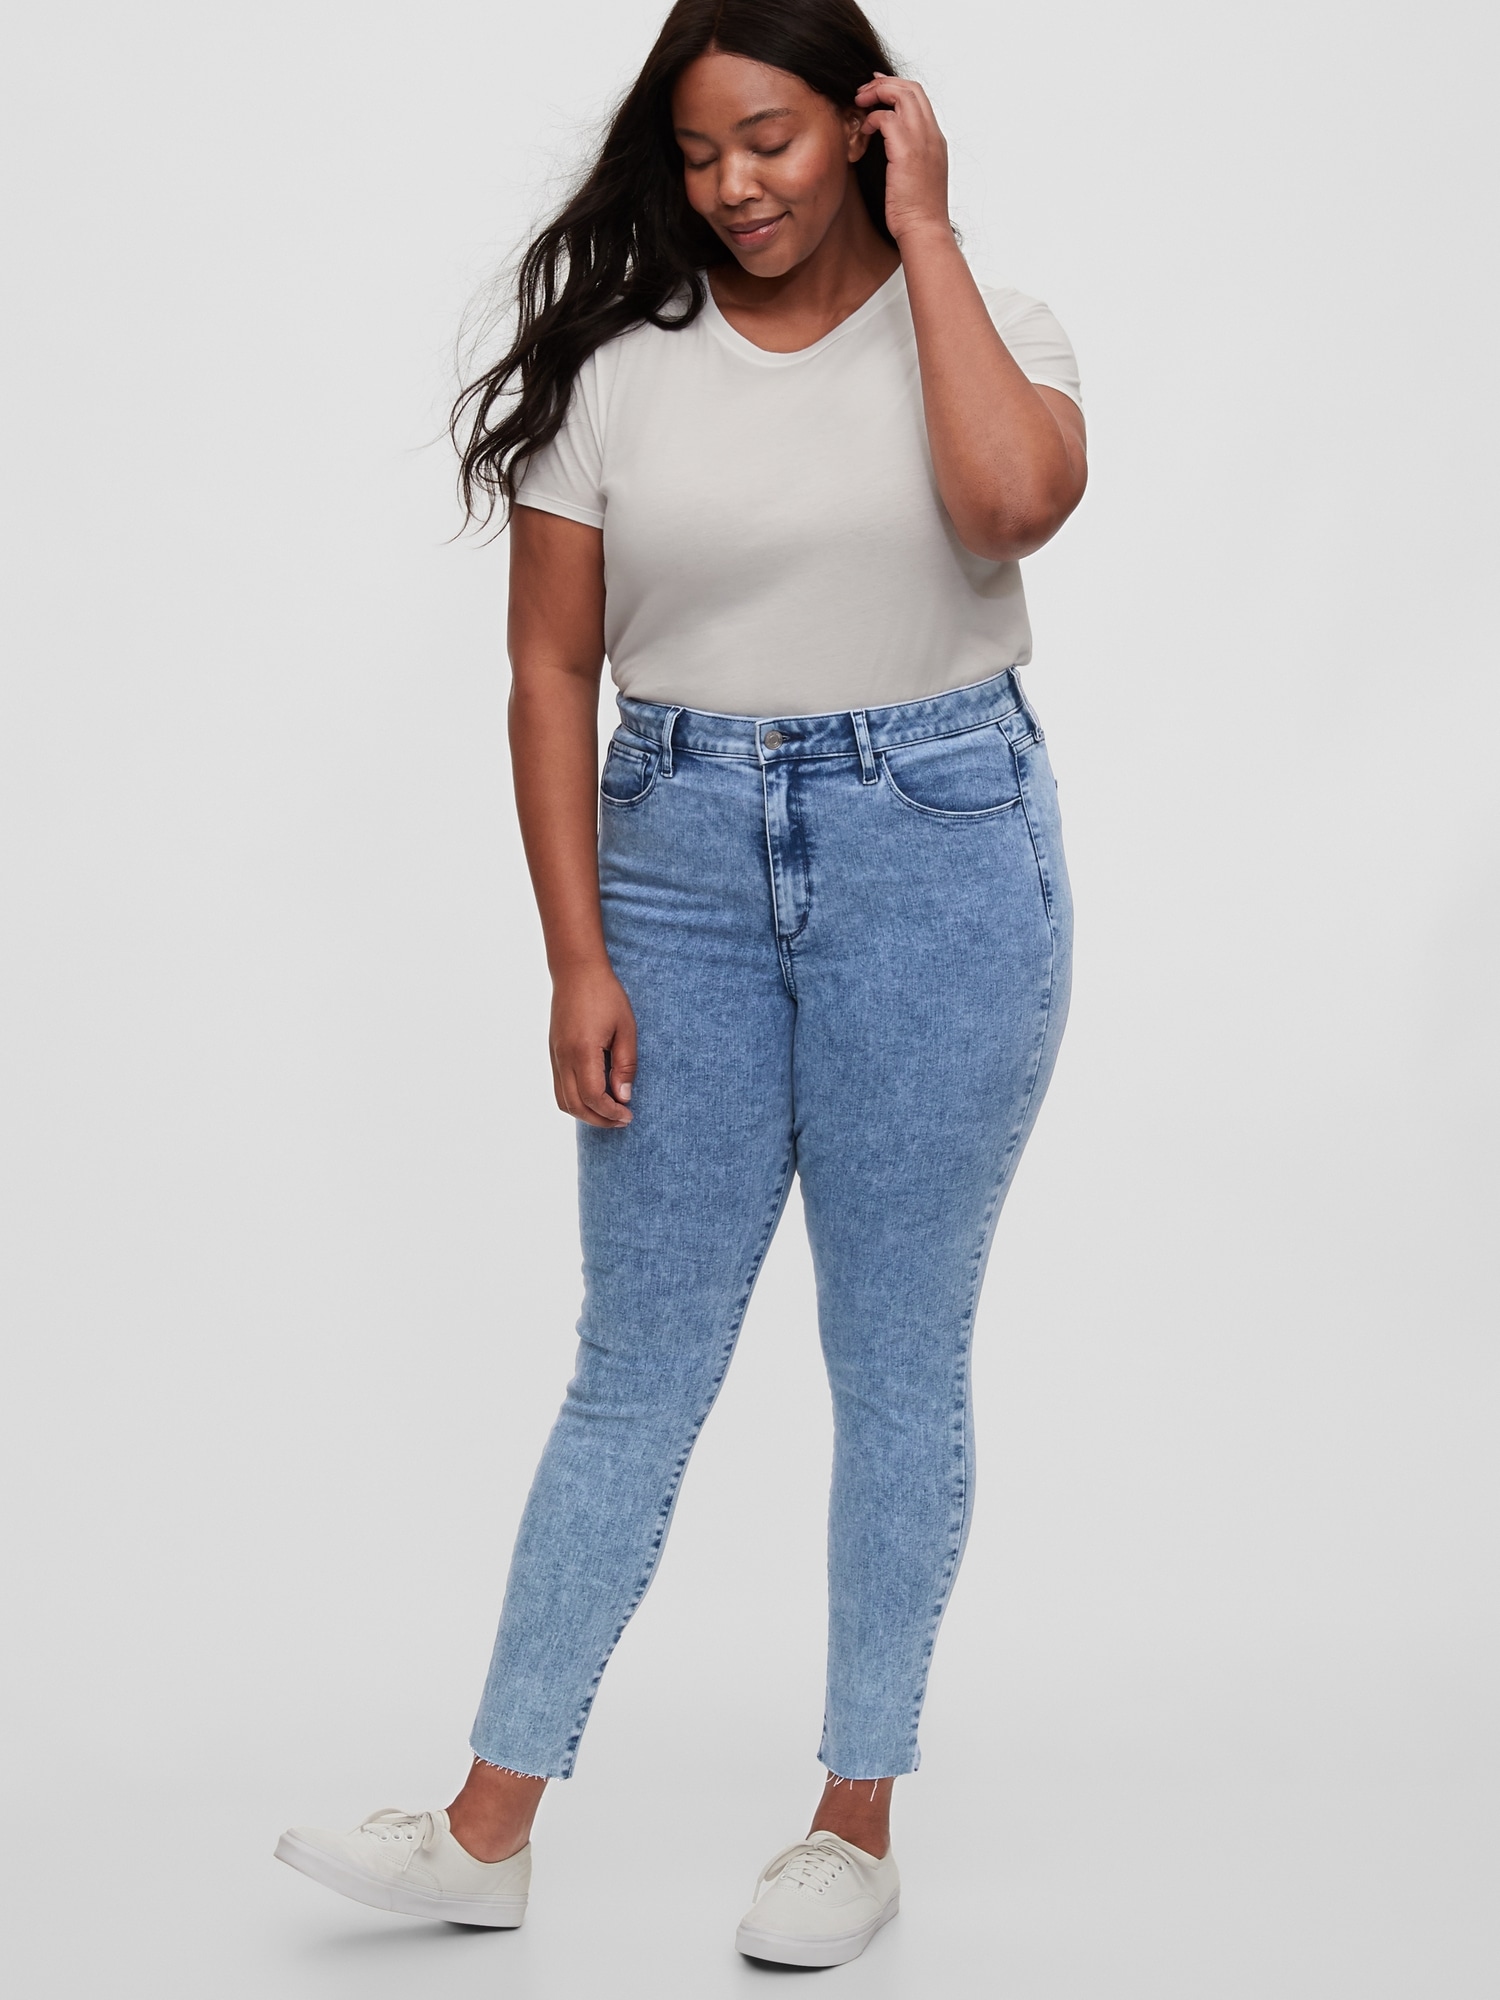 NWT Gap Women's Universal Legging Jeans / Size 20/35R / Honey Mustard Brown